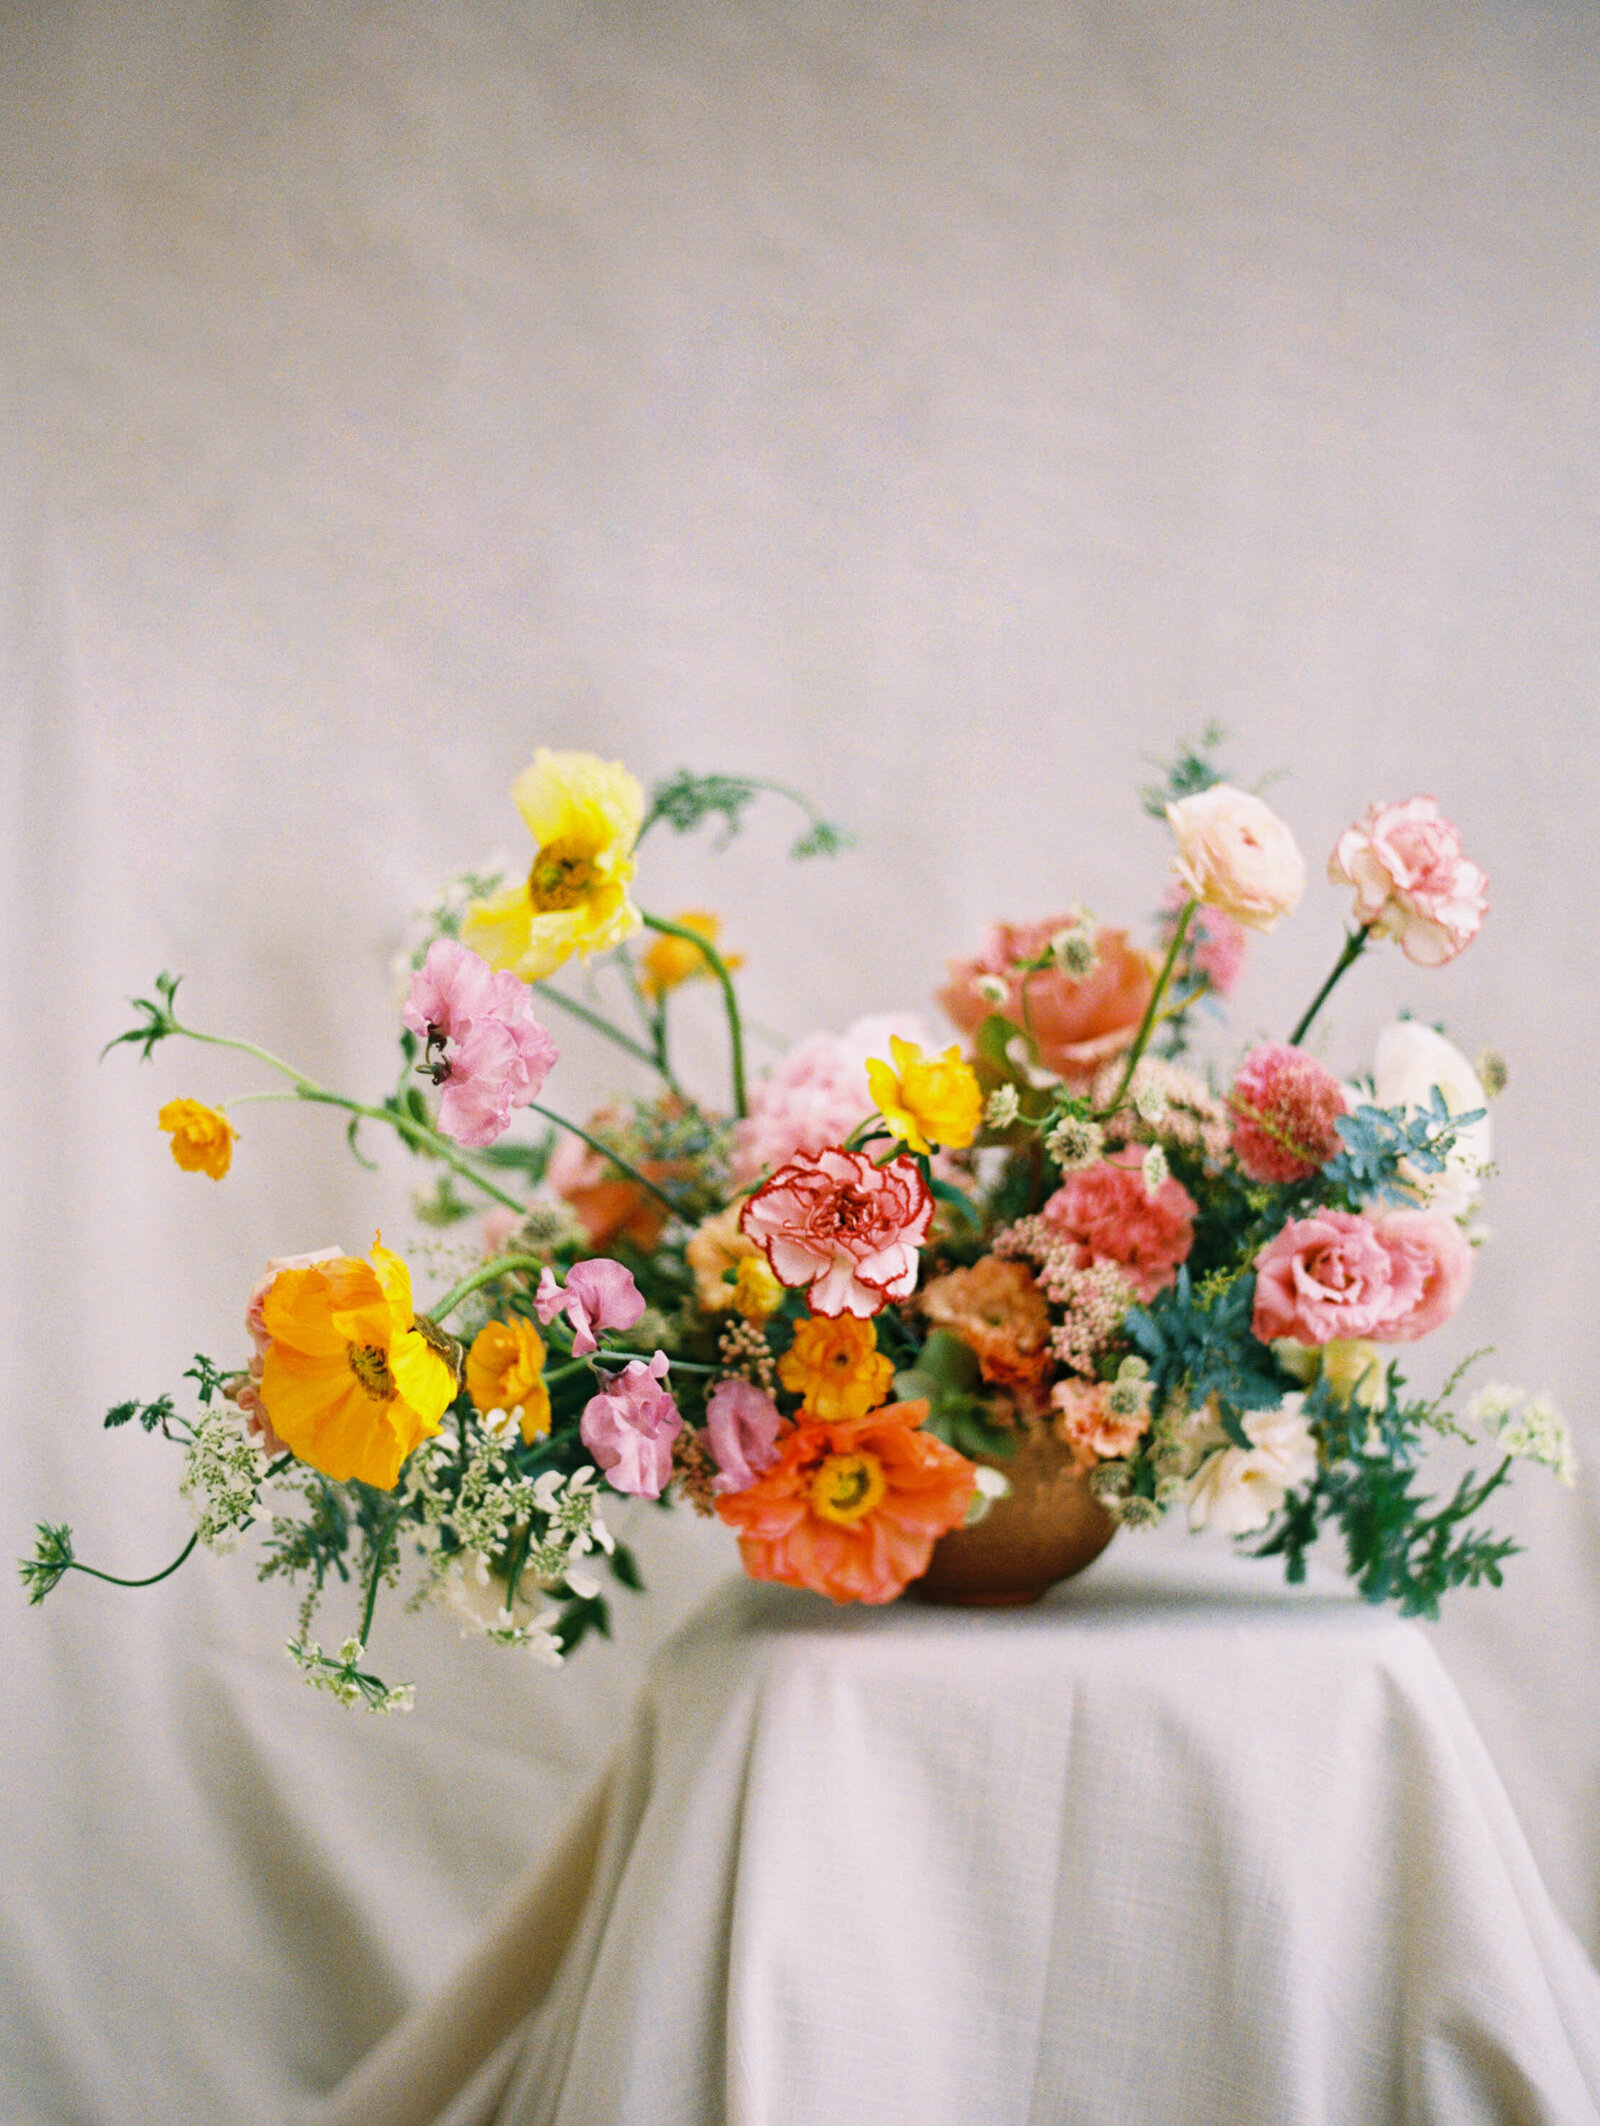 max-owens-design-at-home-floral-arrangements-25-colorful